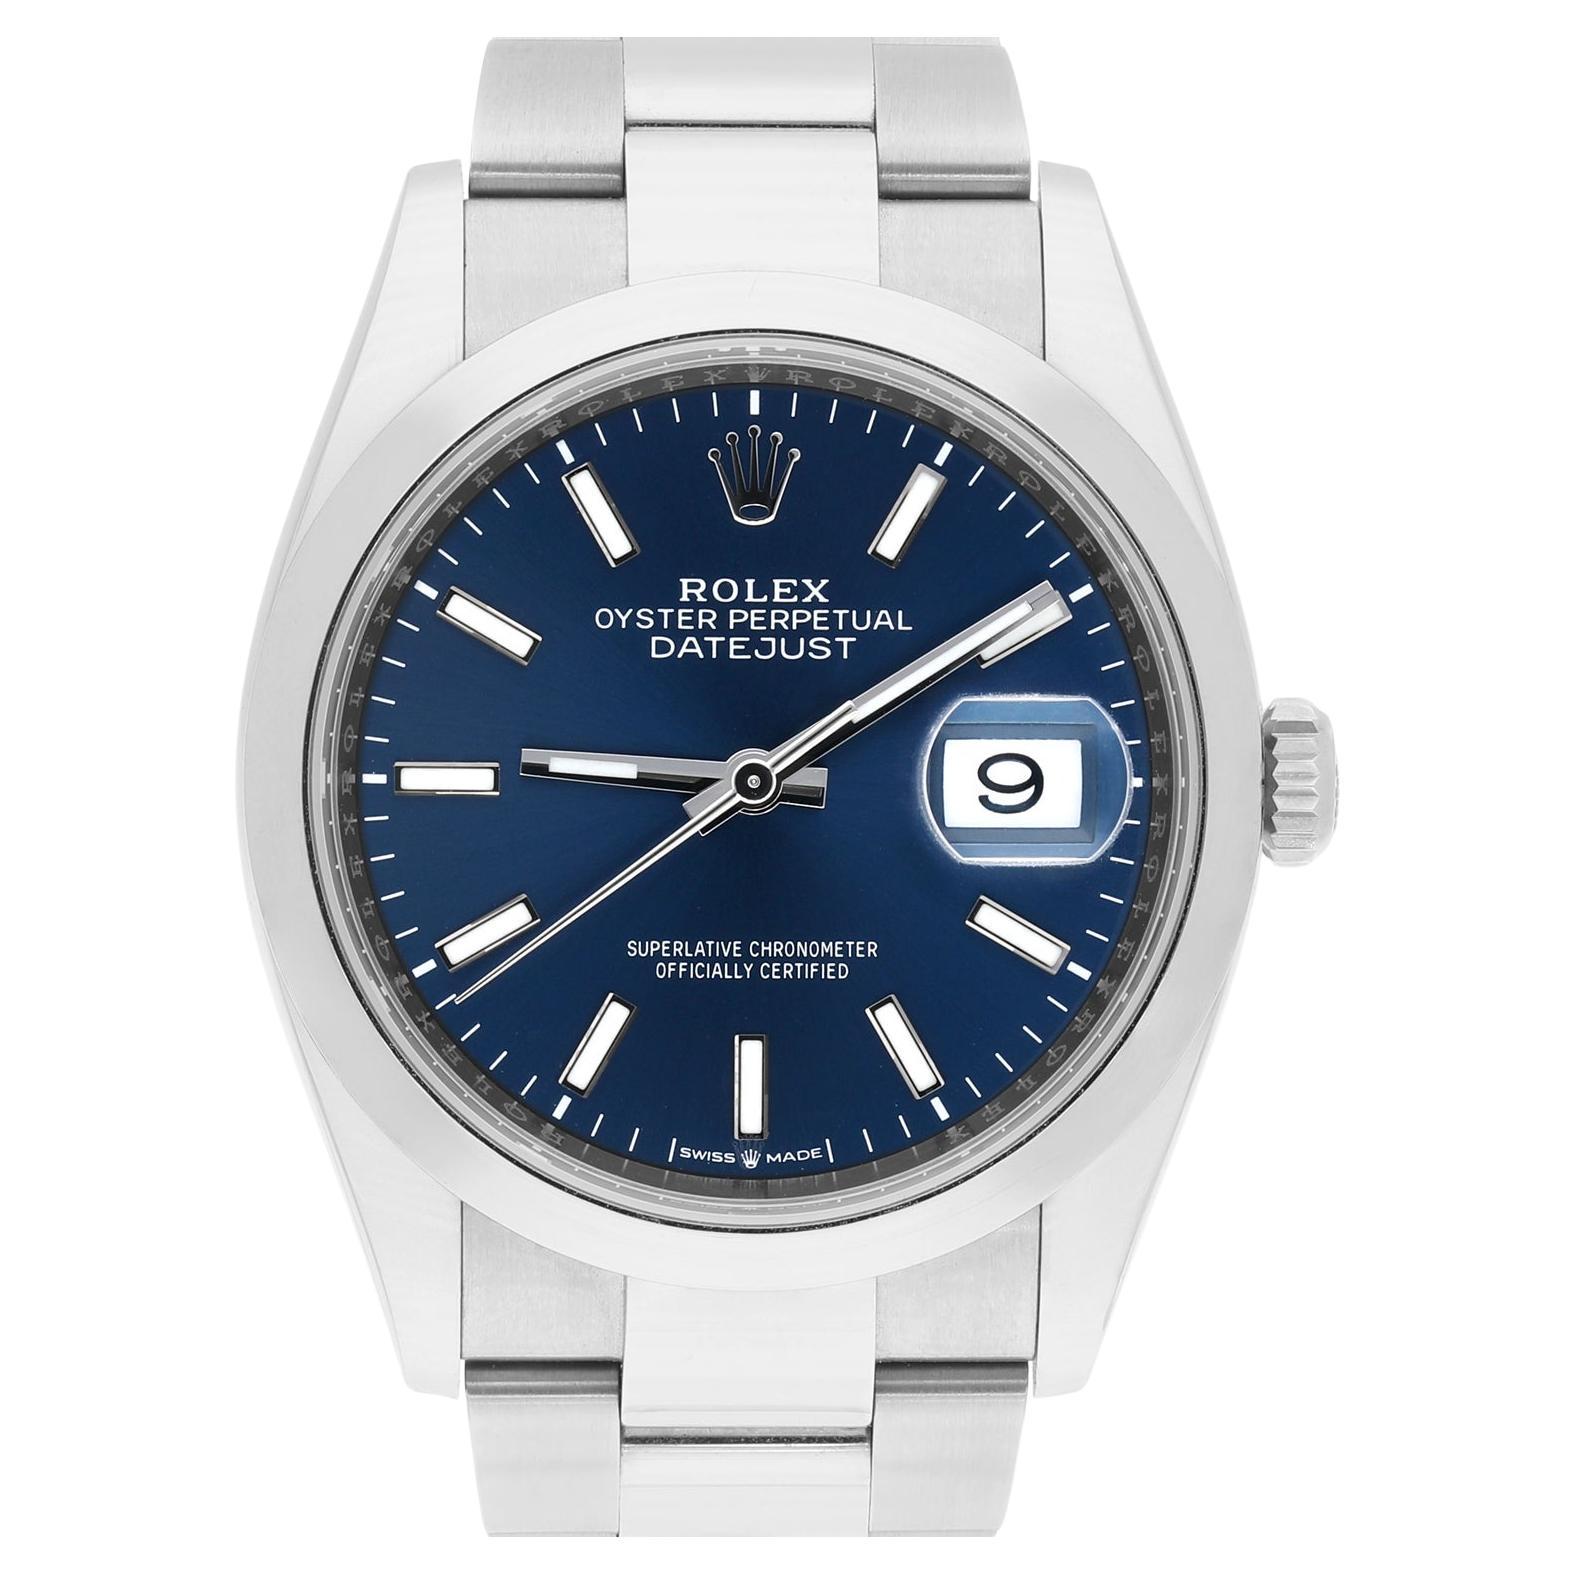 Rolex 126200 Datejust 36mm Blue Index Dial Oyster Bracelet 2021 COMPLETE MINT